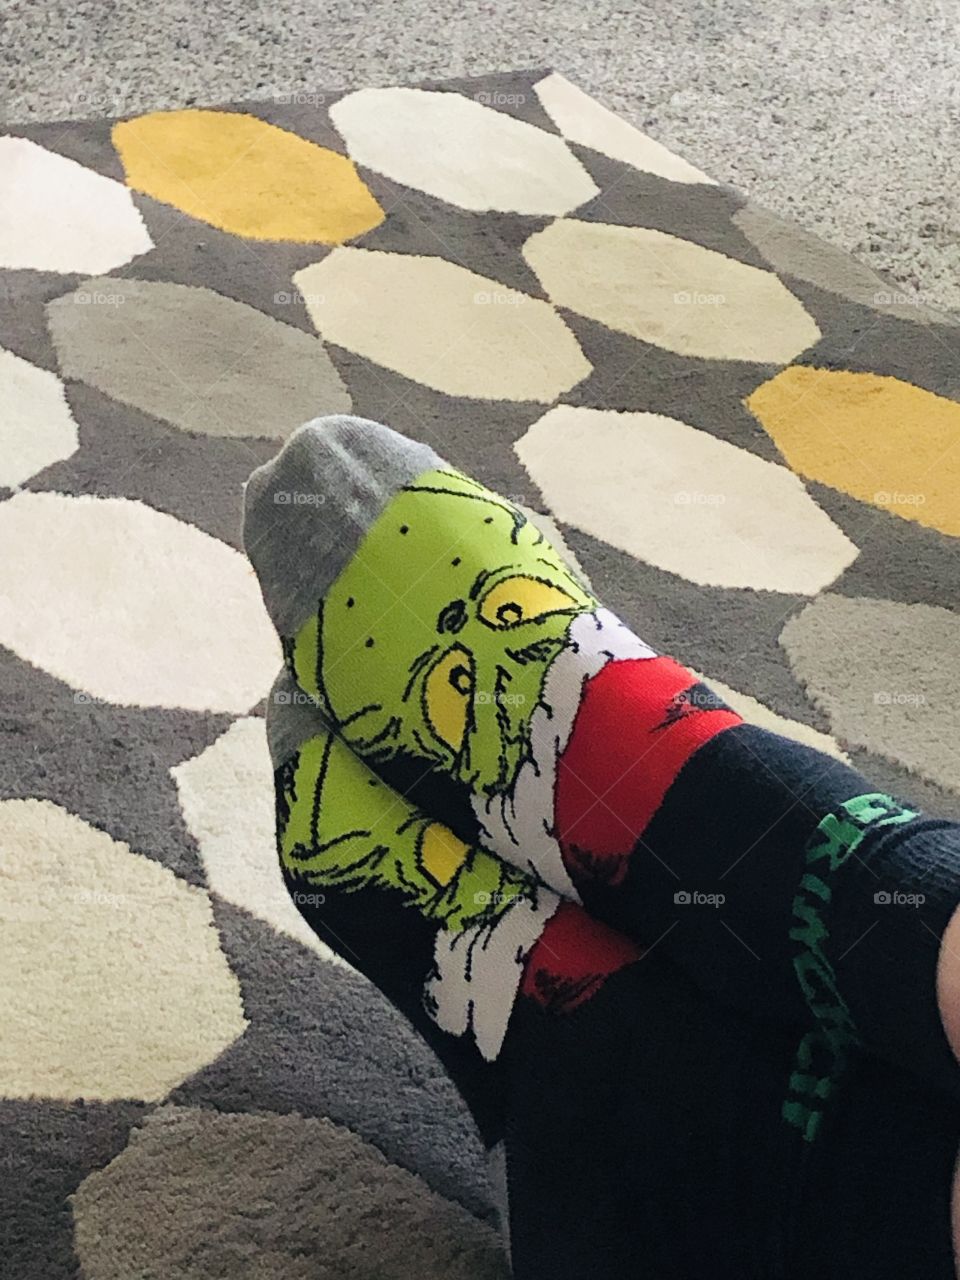 The socks 😂